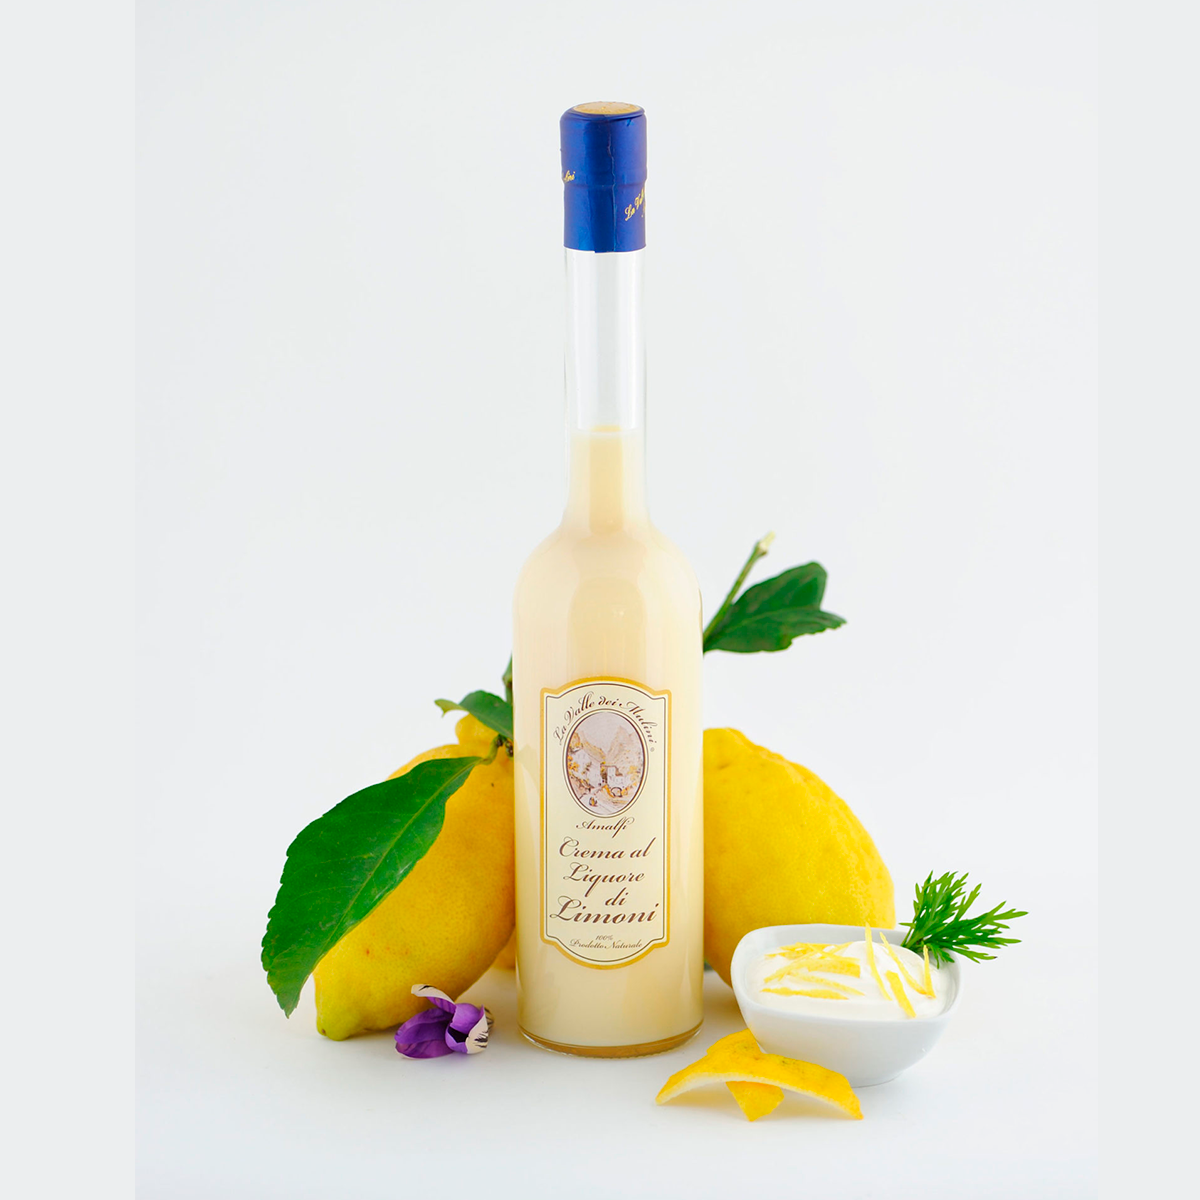 Limoncello cream from Amalfi Coast – Duca d'Italia